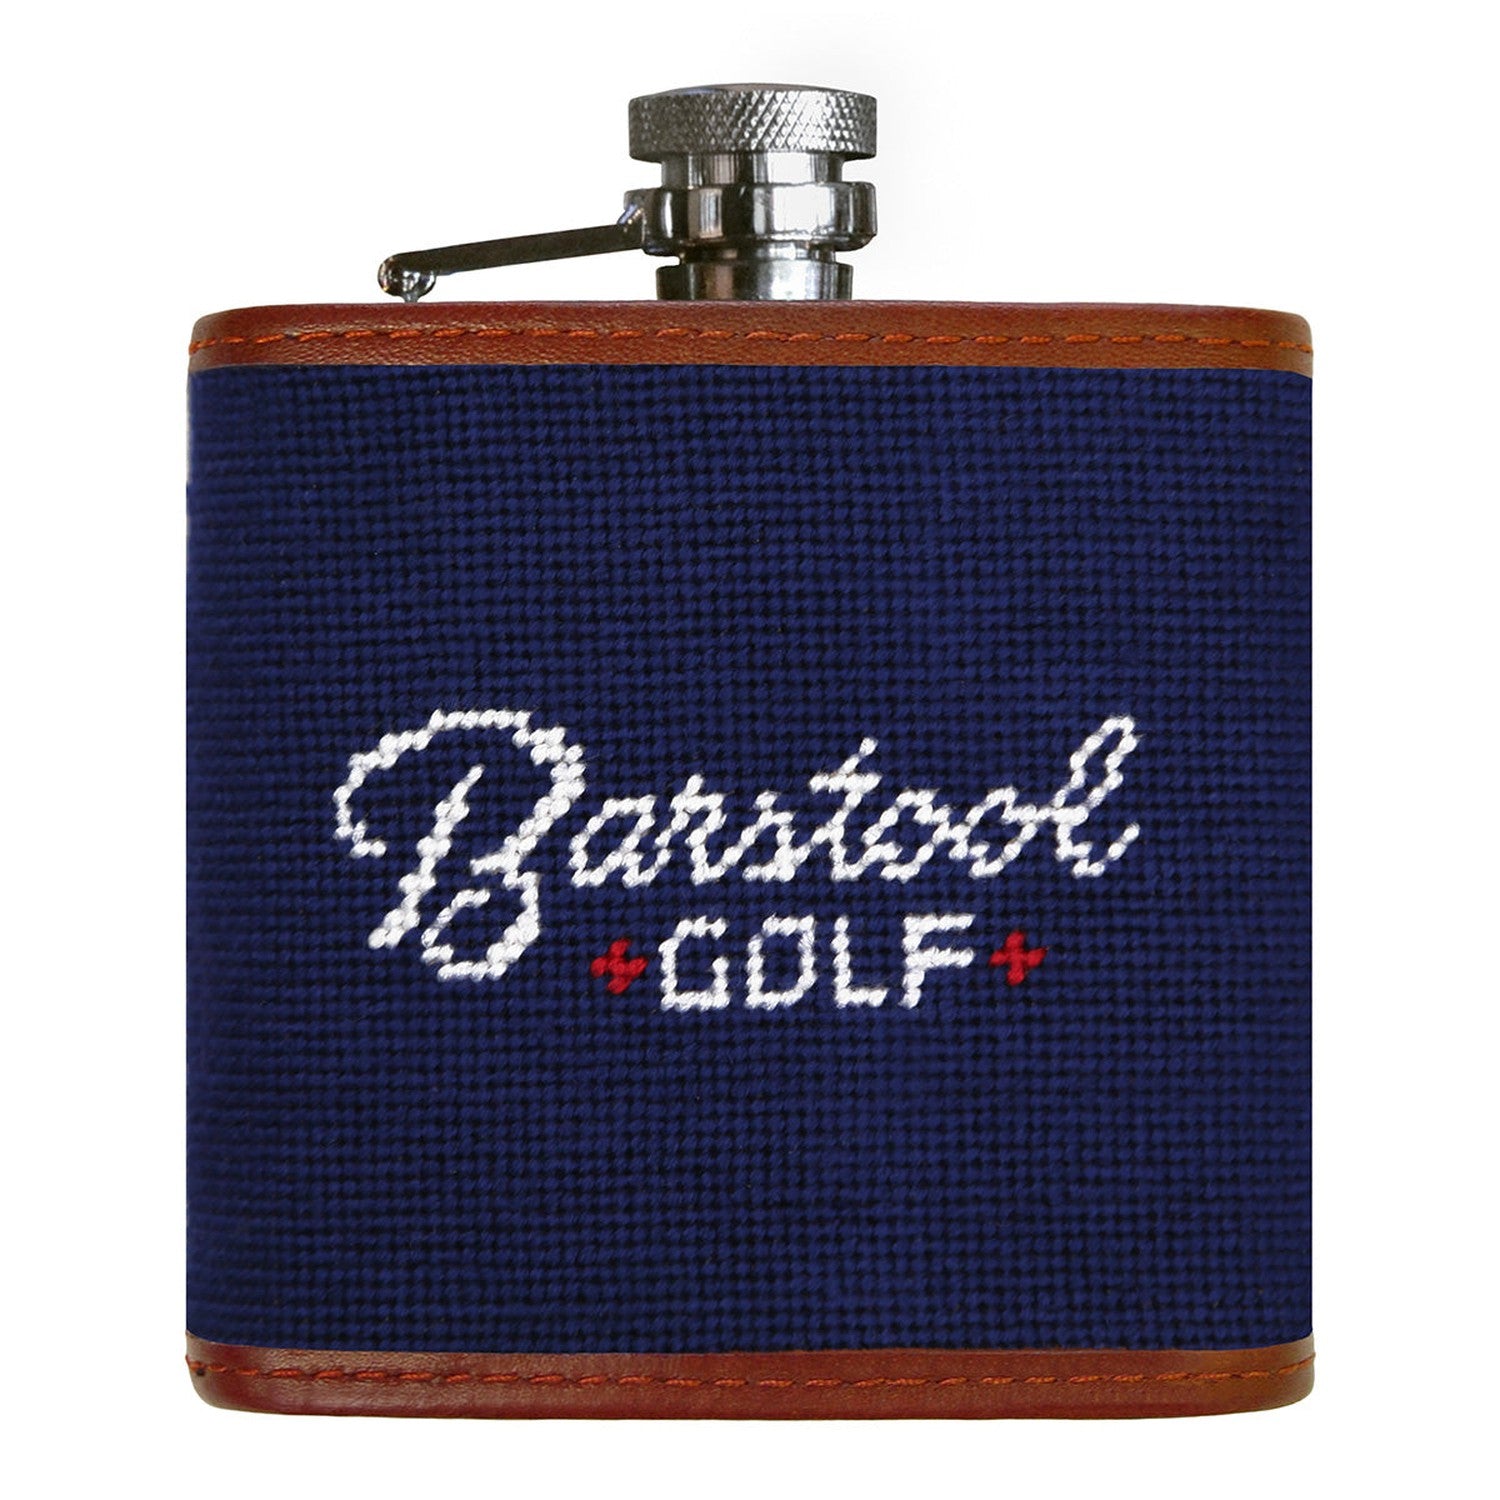 Smathers & Branson x Barstool Golf Crossed Tees Flask